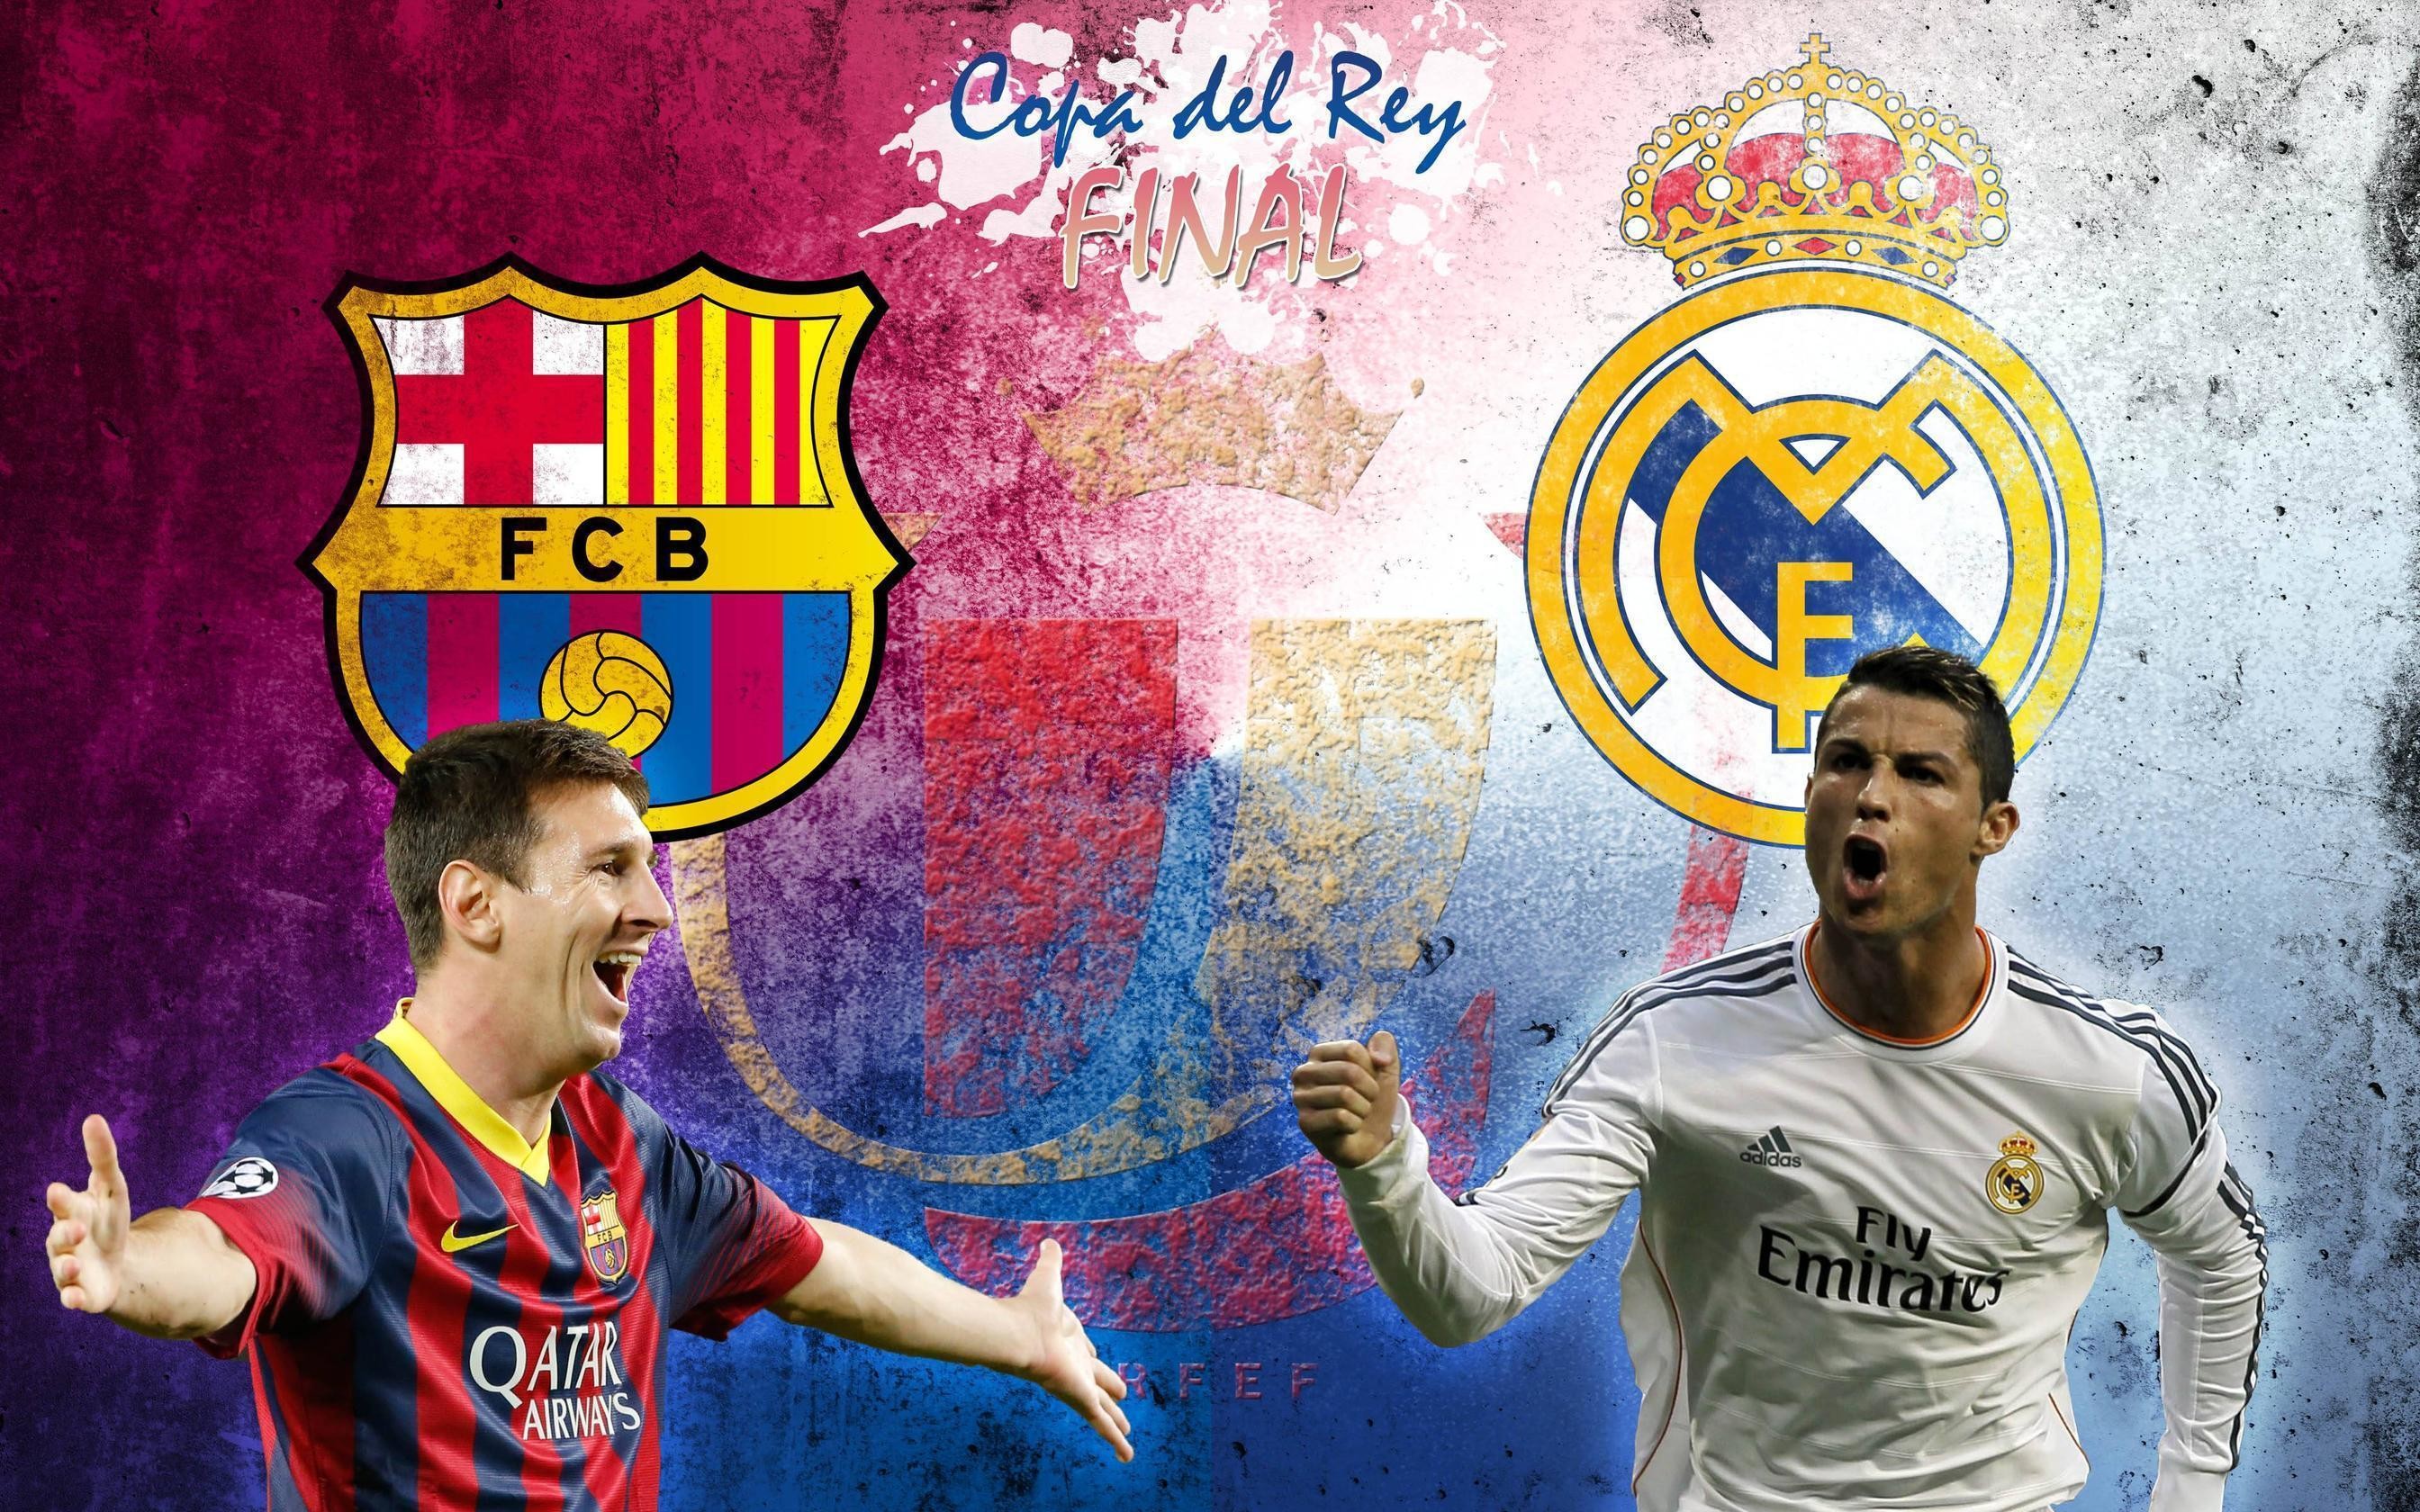 Ronaldo And Messi Wallpaper Image